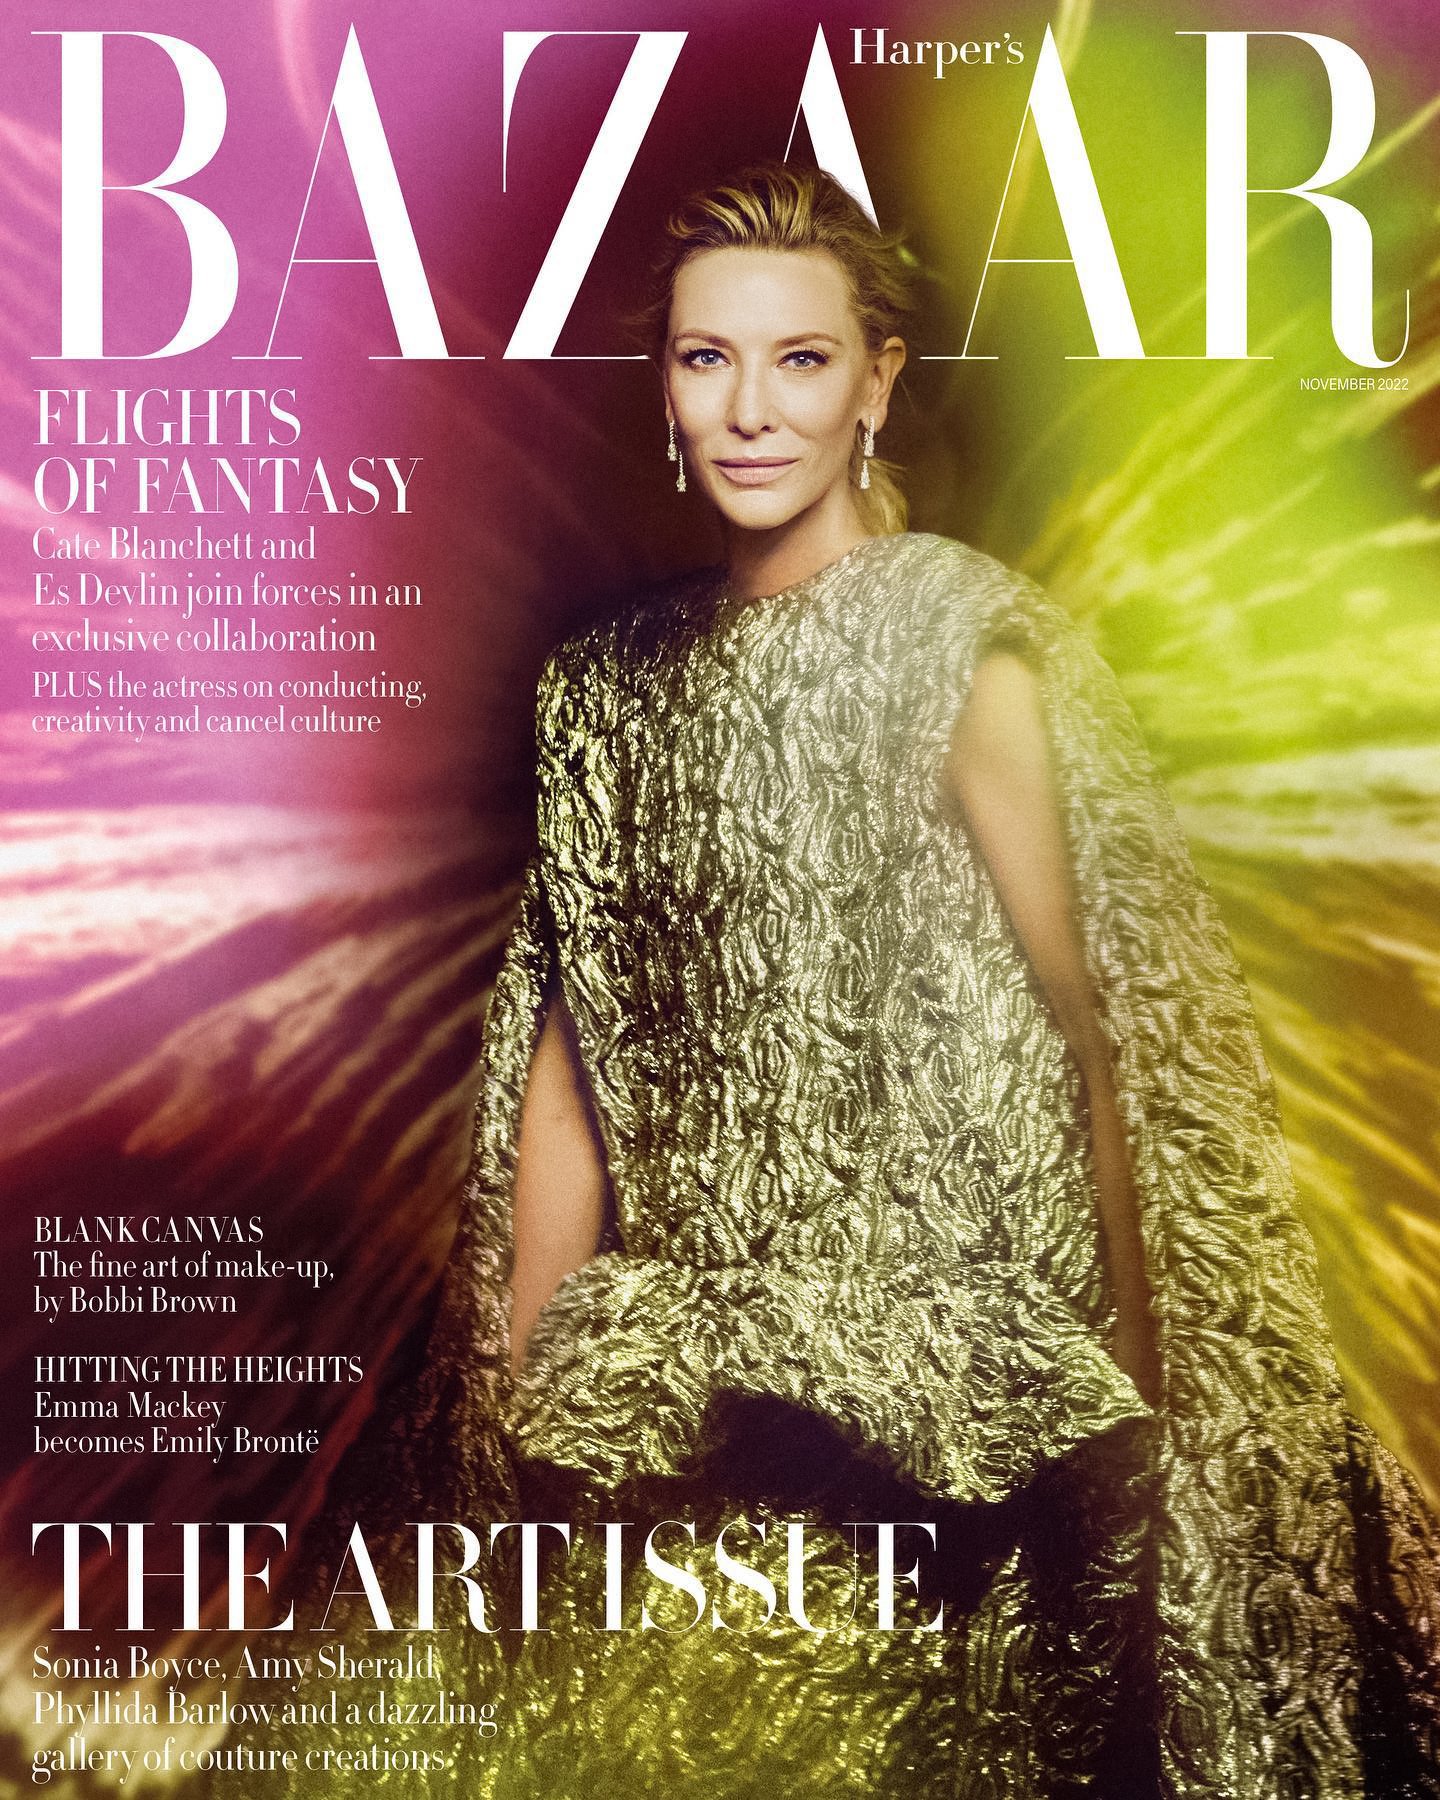 Cate-Blanchett-by-Kristian-Schuller-Harpers-Bazaar-November-202200006.jpeg